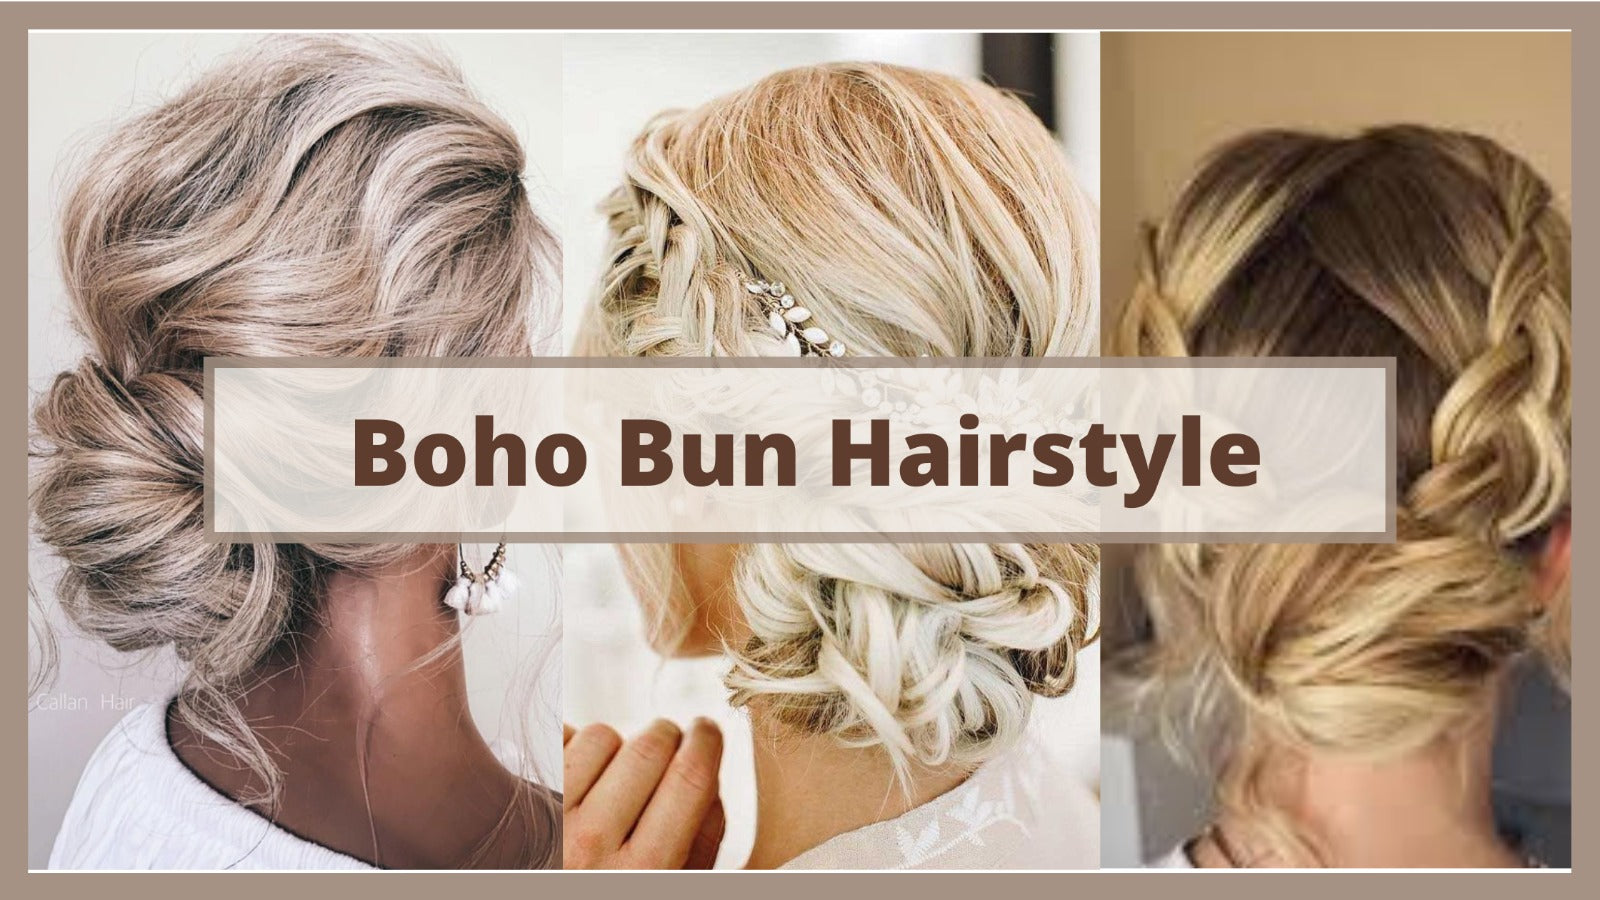 6 Boho Bun Hairstyle ideas you can create yourself!